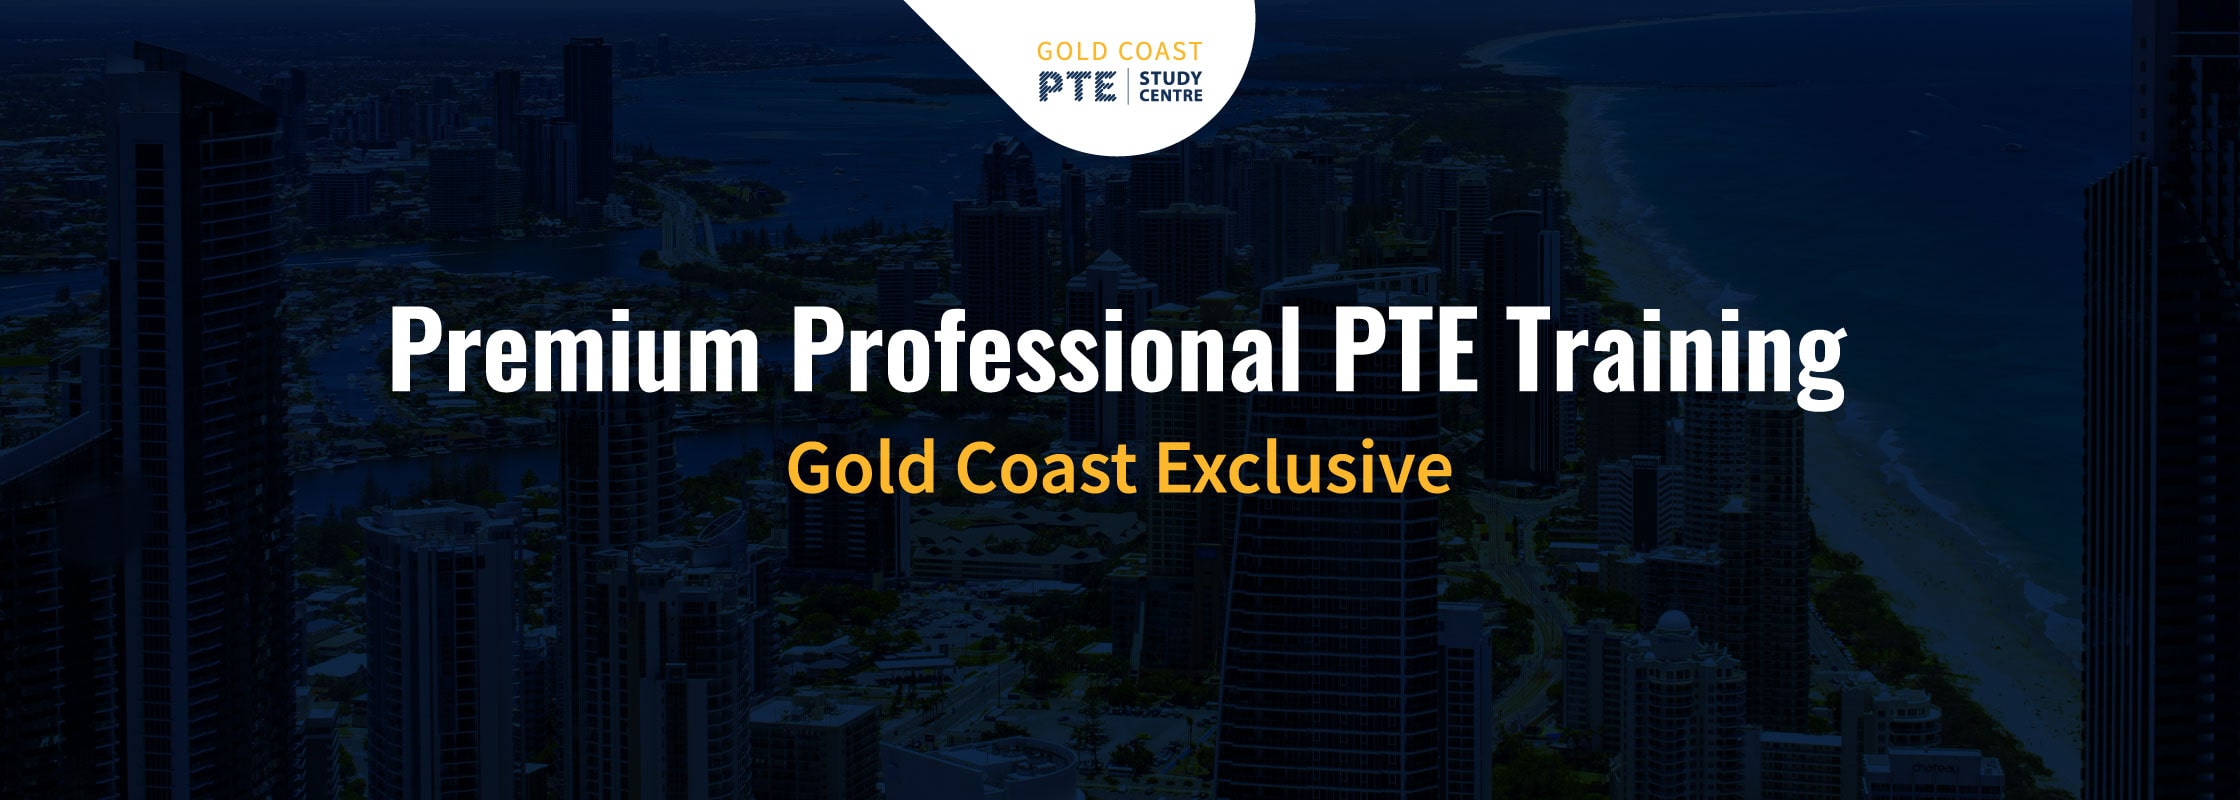 Gold Coast PTE Study Centre